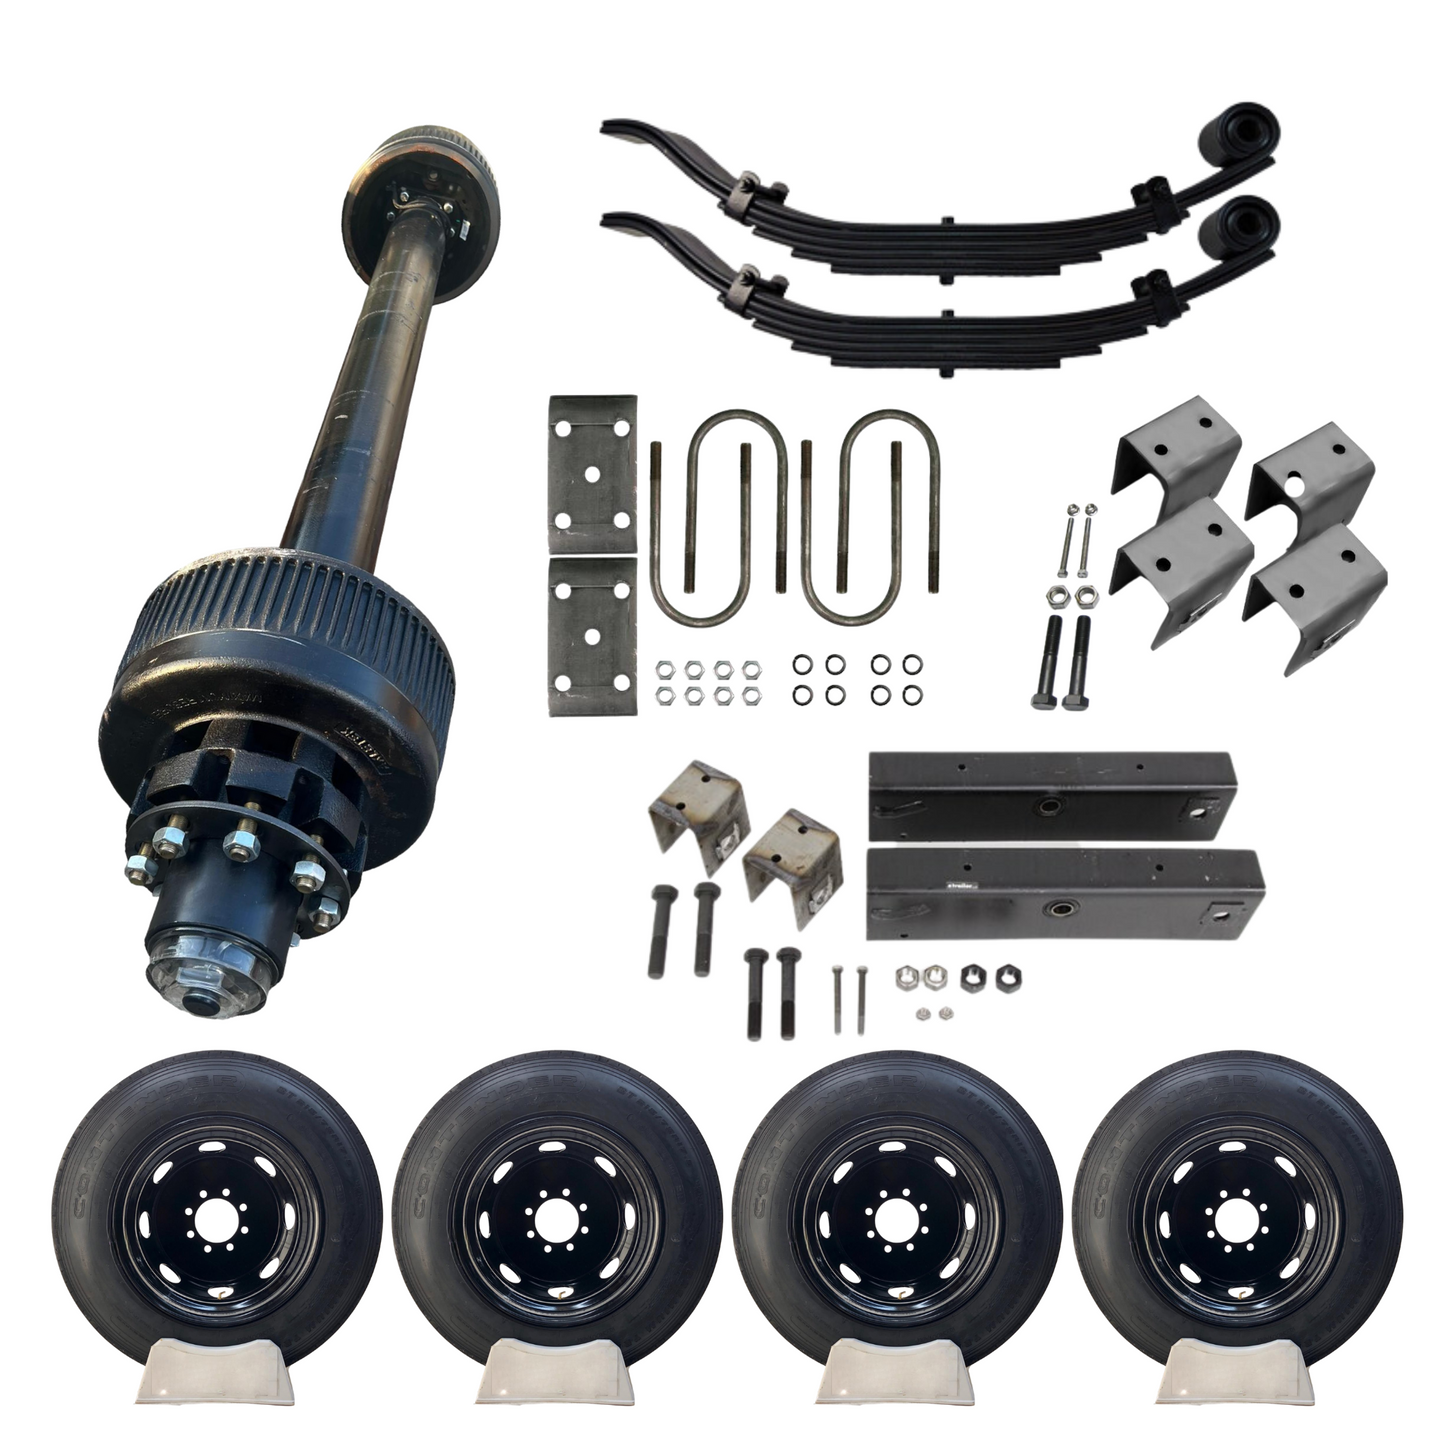 12,000 lb Carter Single Trailer Axle Tire Wheel Kit - 17.5" Black Duals